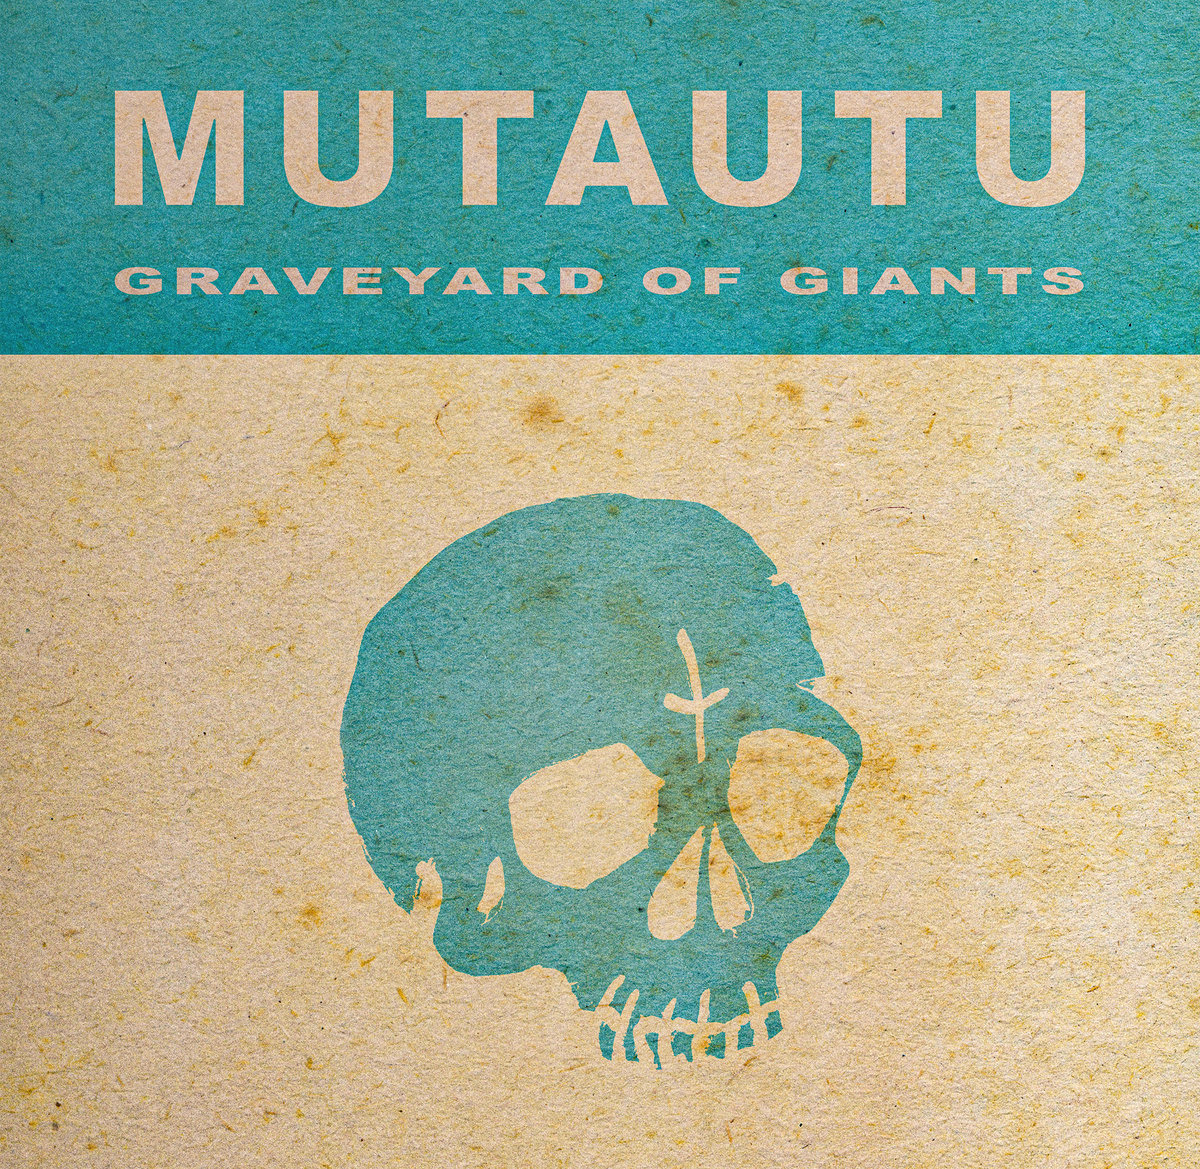 Reseña: MUTAUTU.- ‘Graveyard of giants’